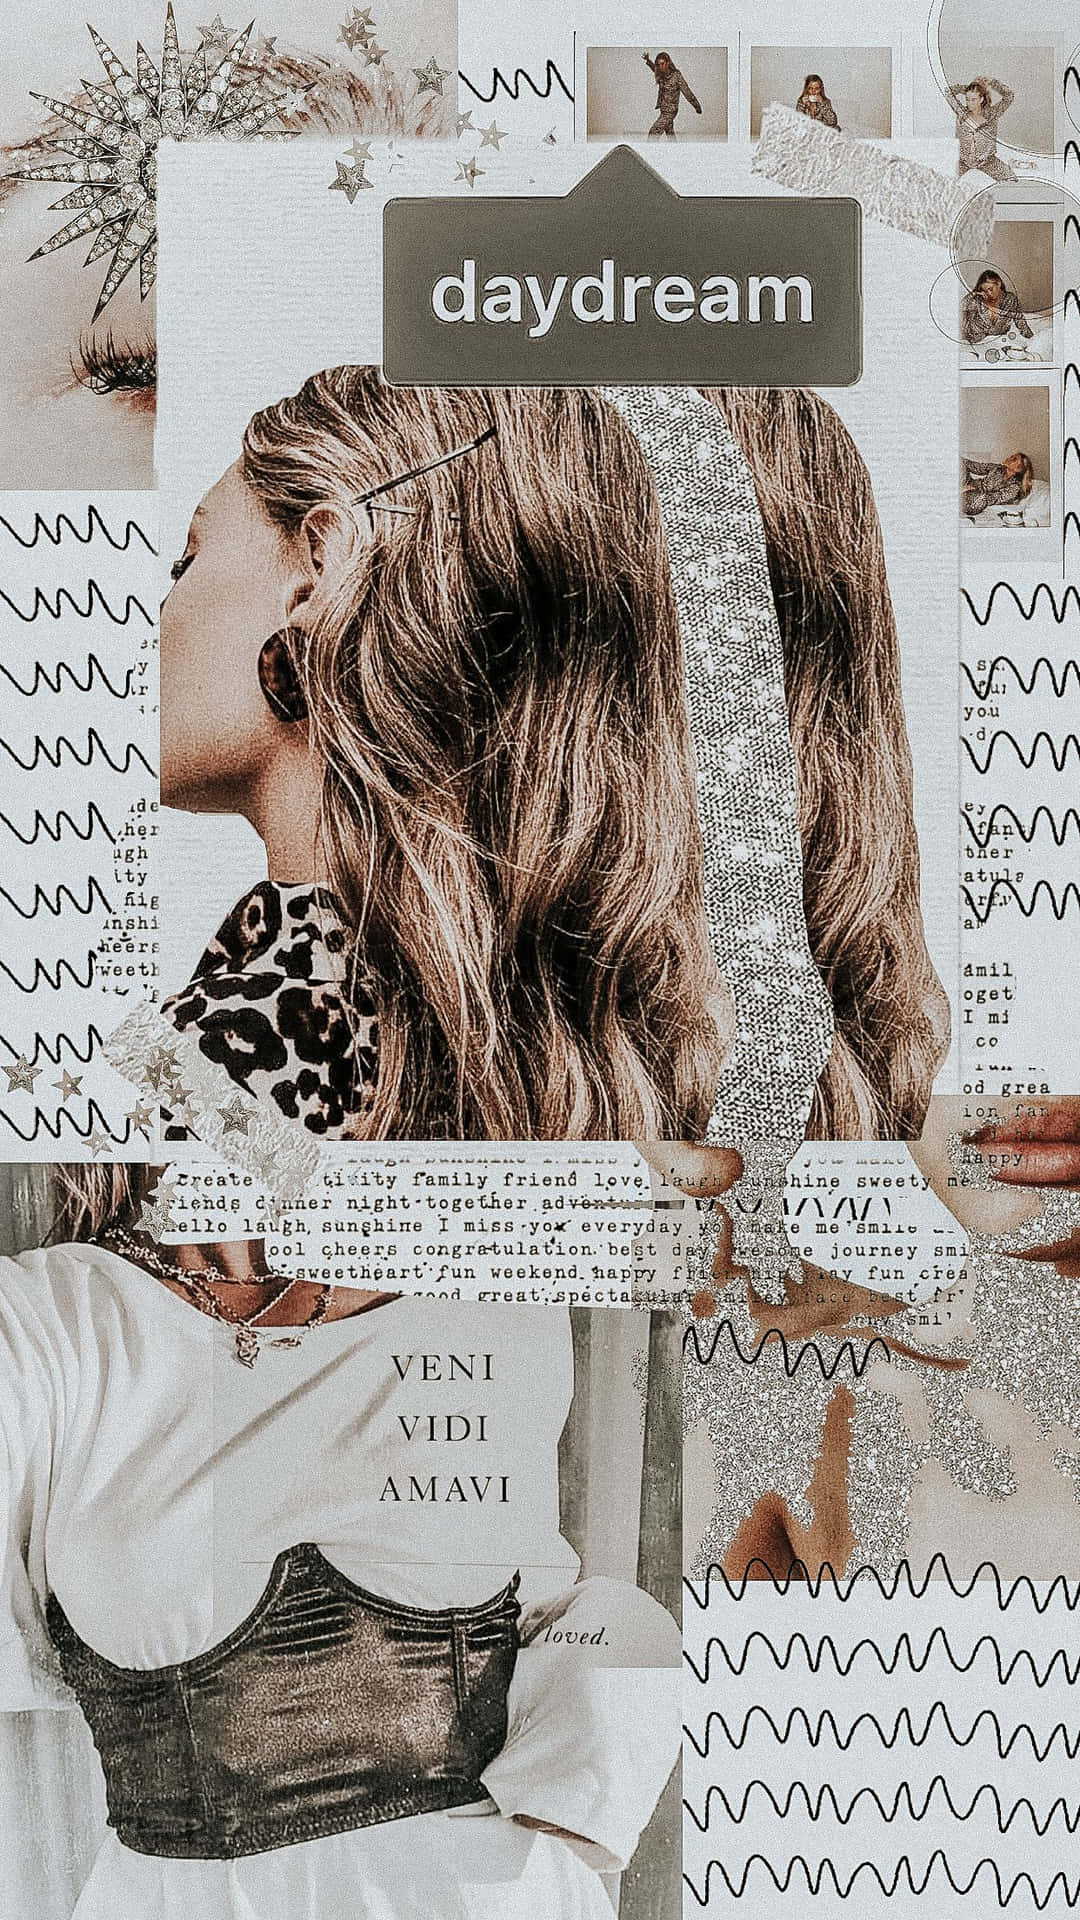 Glittery Daydream Collage Wallpaper